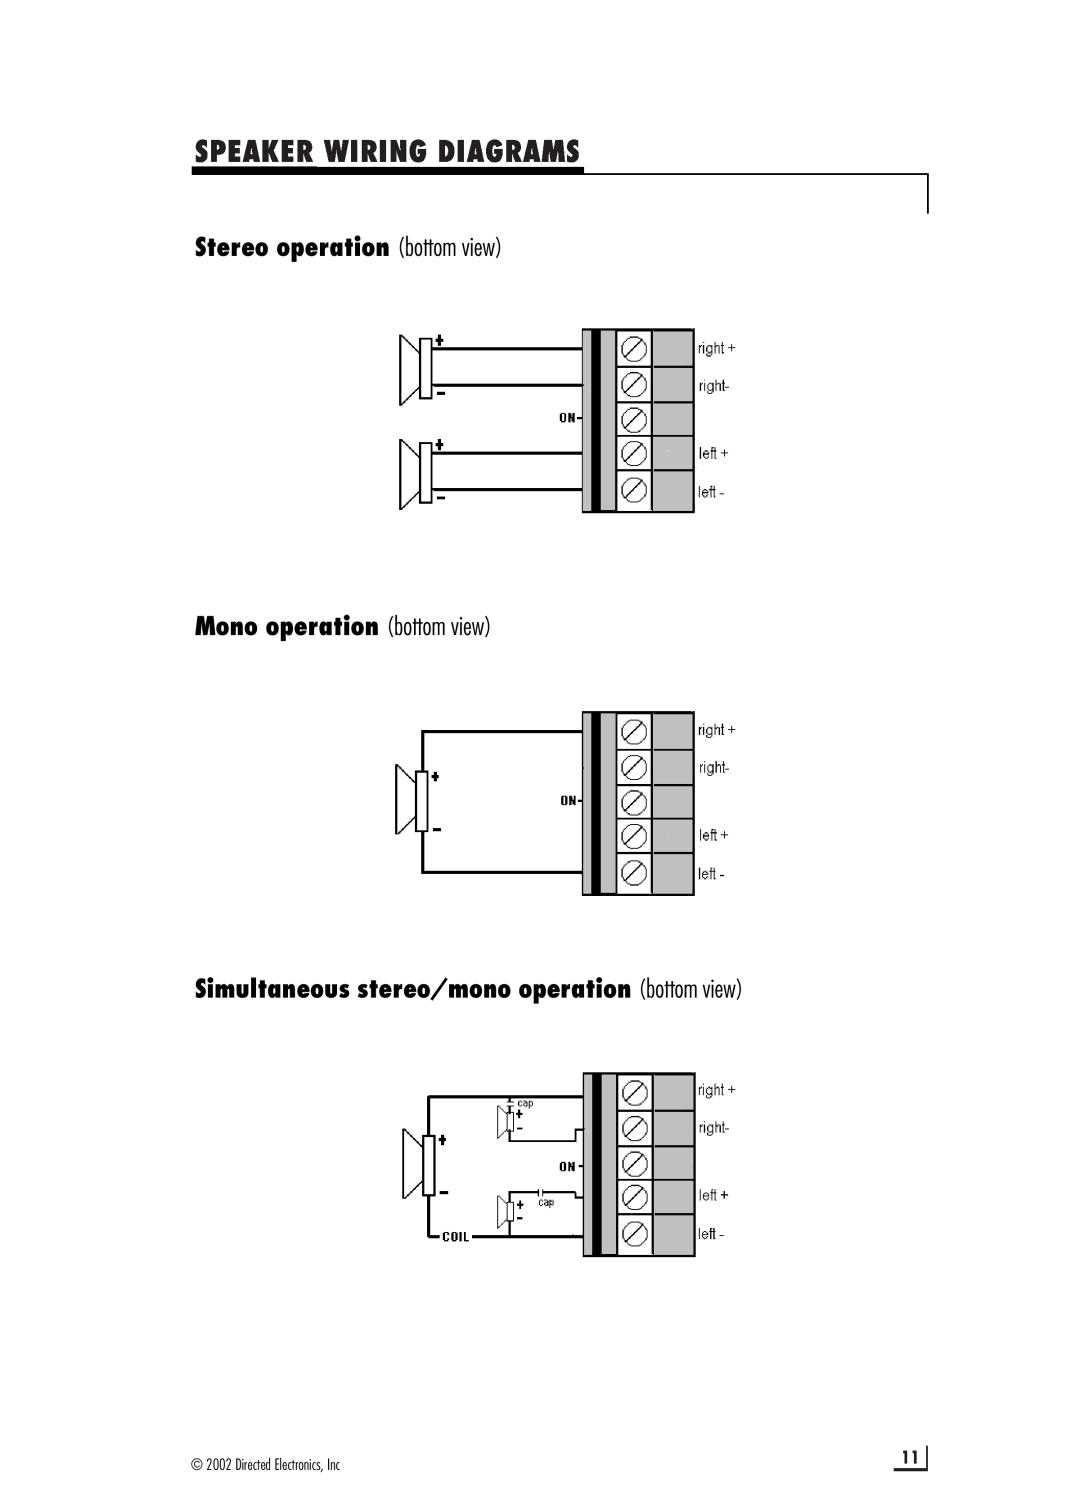 Viper 150.2 manual Speaker Wiring Diagrams, Stereo operation bottom view Mono operation bottom view 